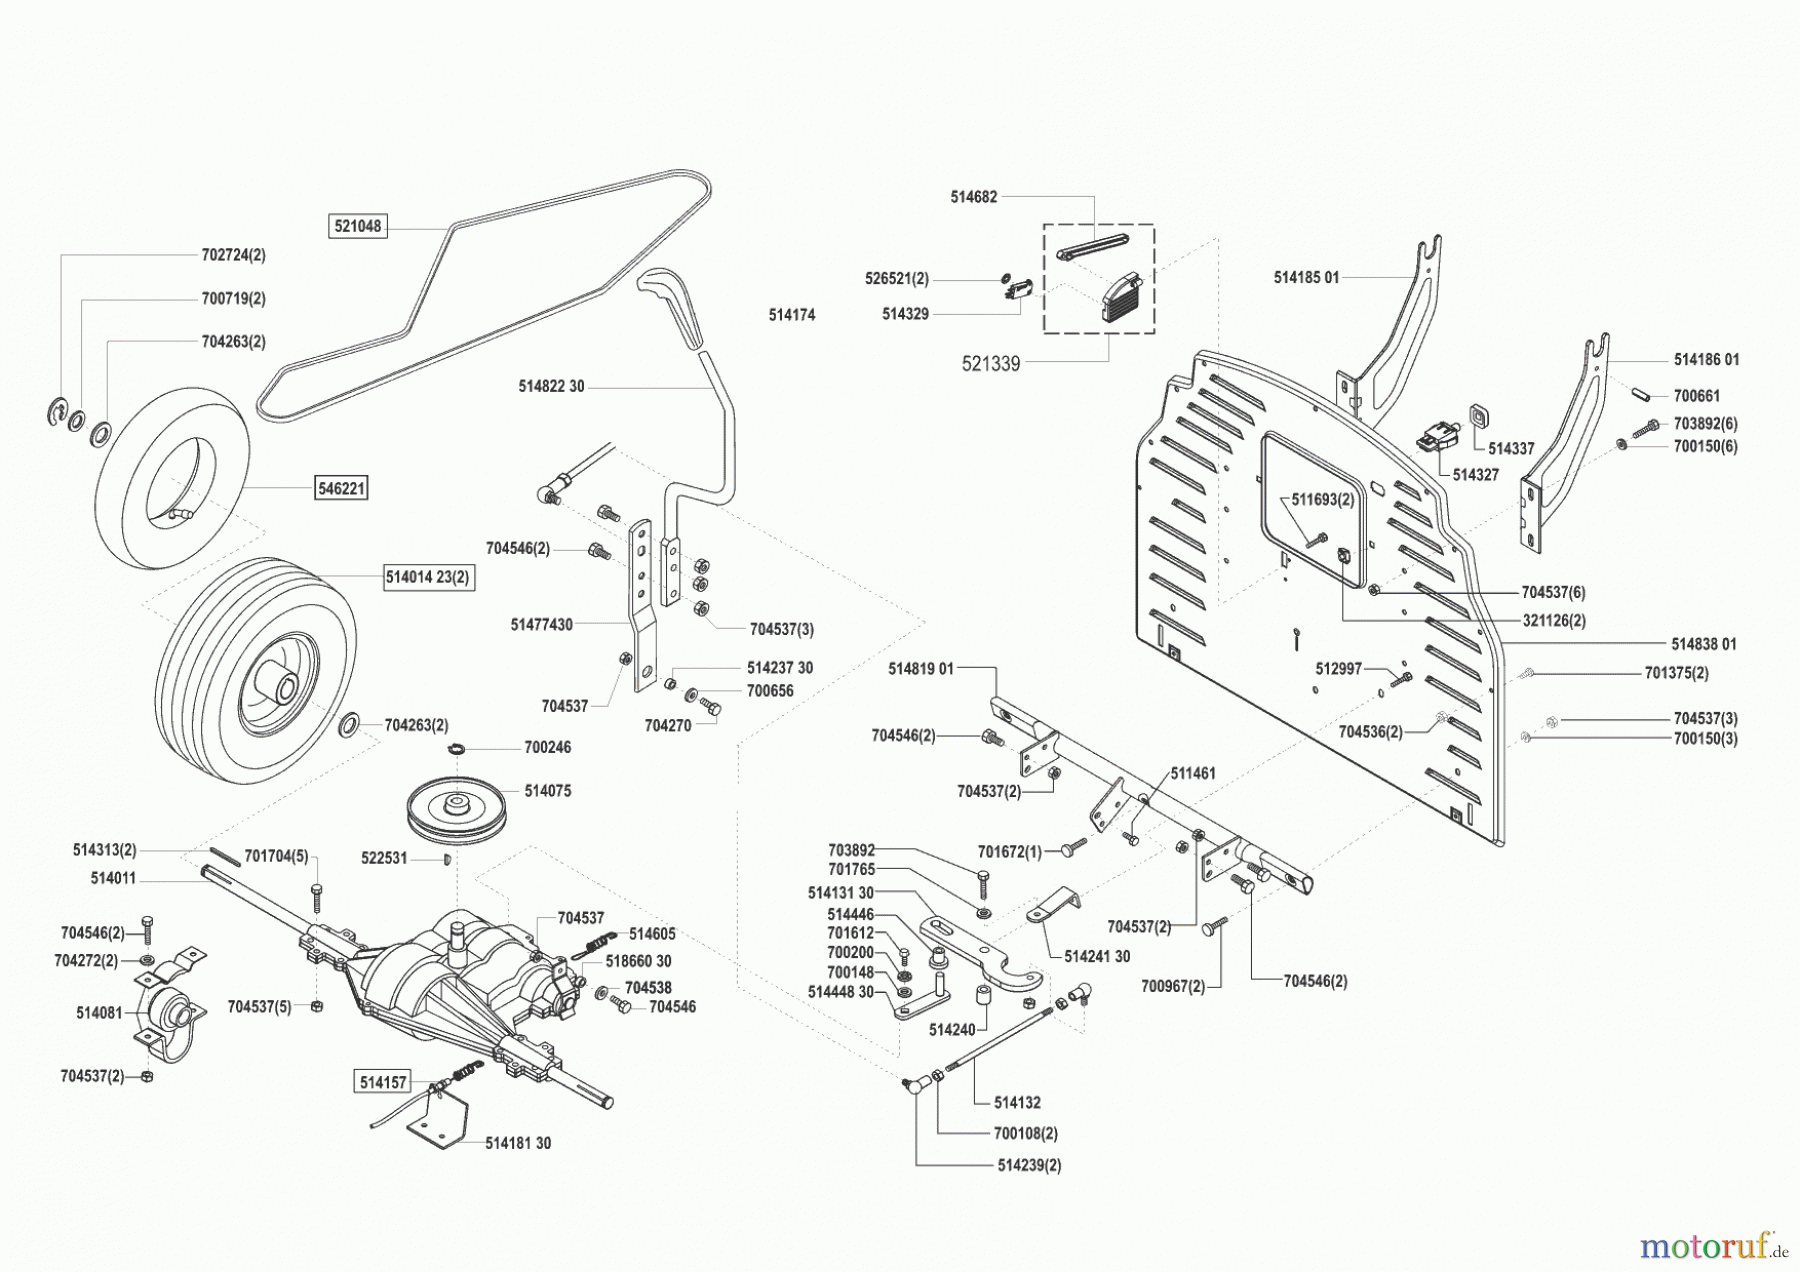  Concord Gartentechnik Rasentraktor T13-102 MAS  10/2002 Seite 3